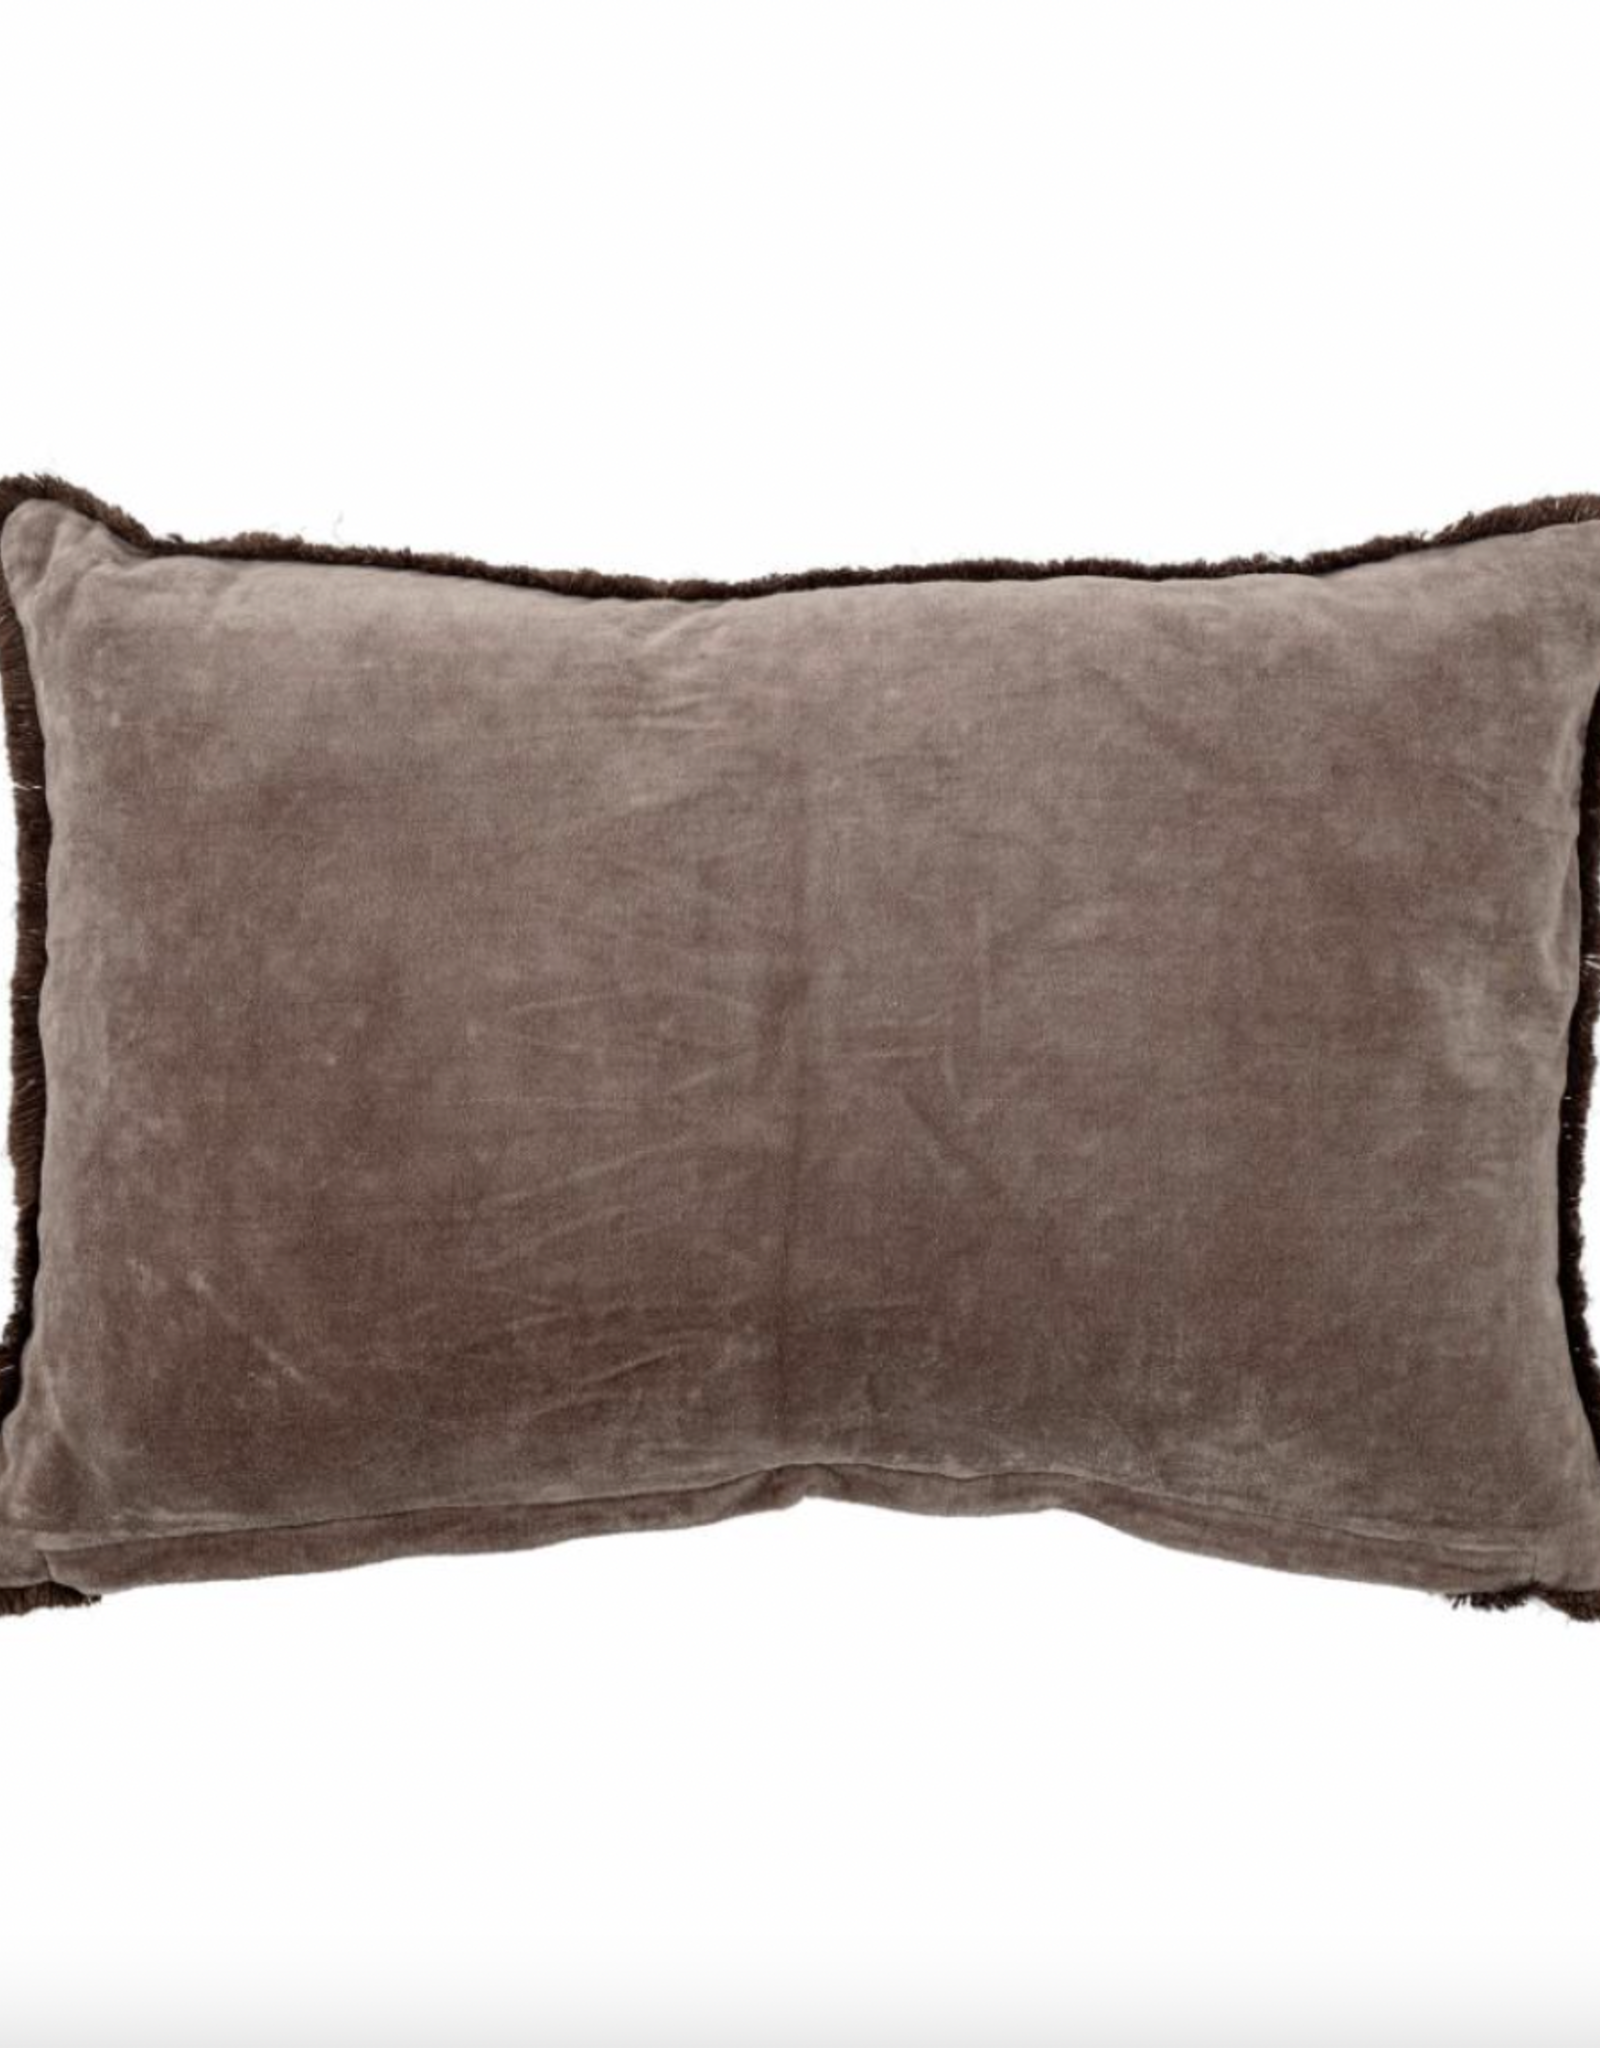 Bloomingville Bam cushion, brown, cotton